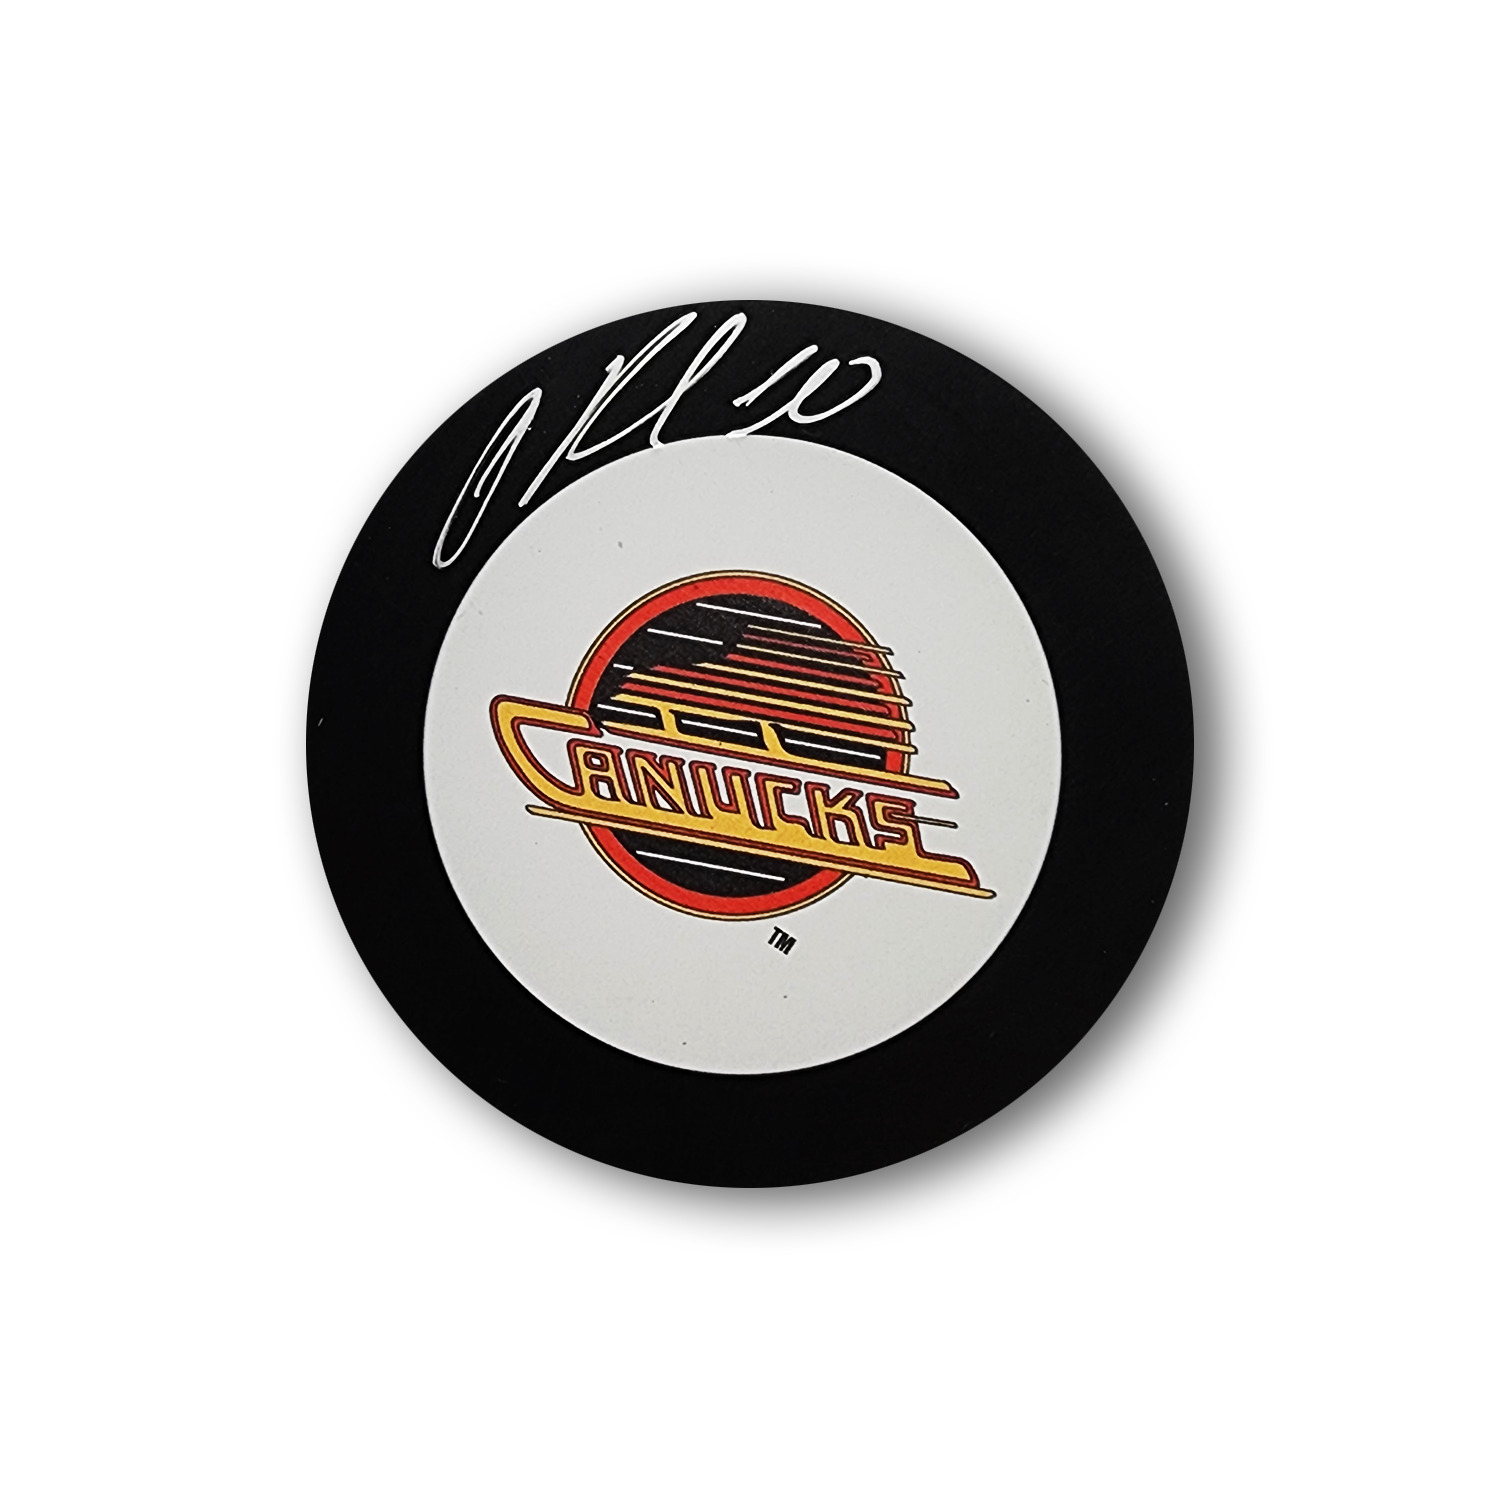 Pavel Bure Autographed Vancouver Canucks Hockey Puck (Large Logo)